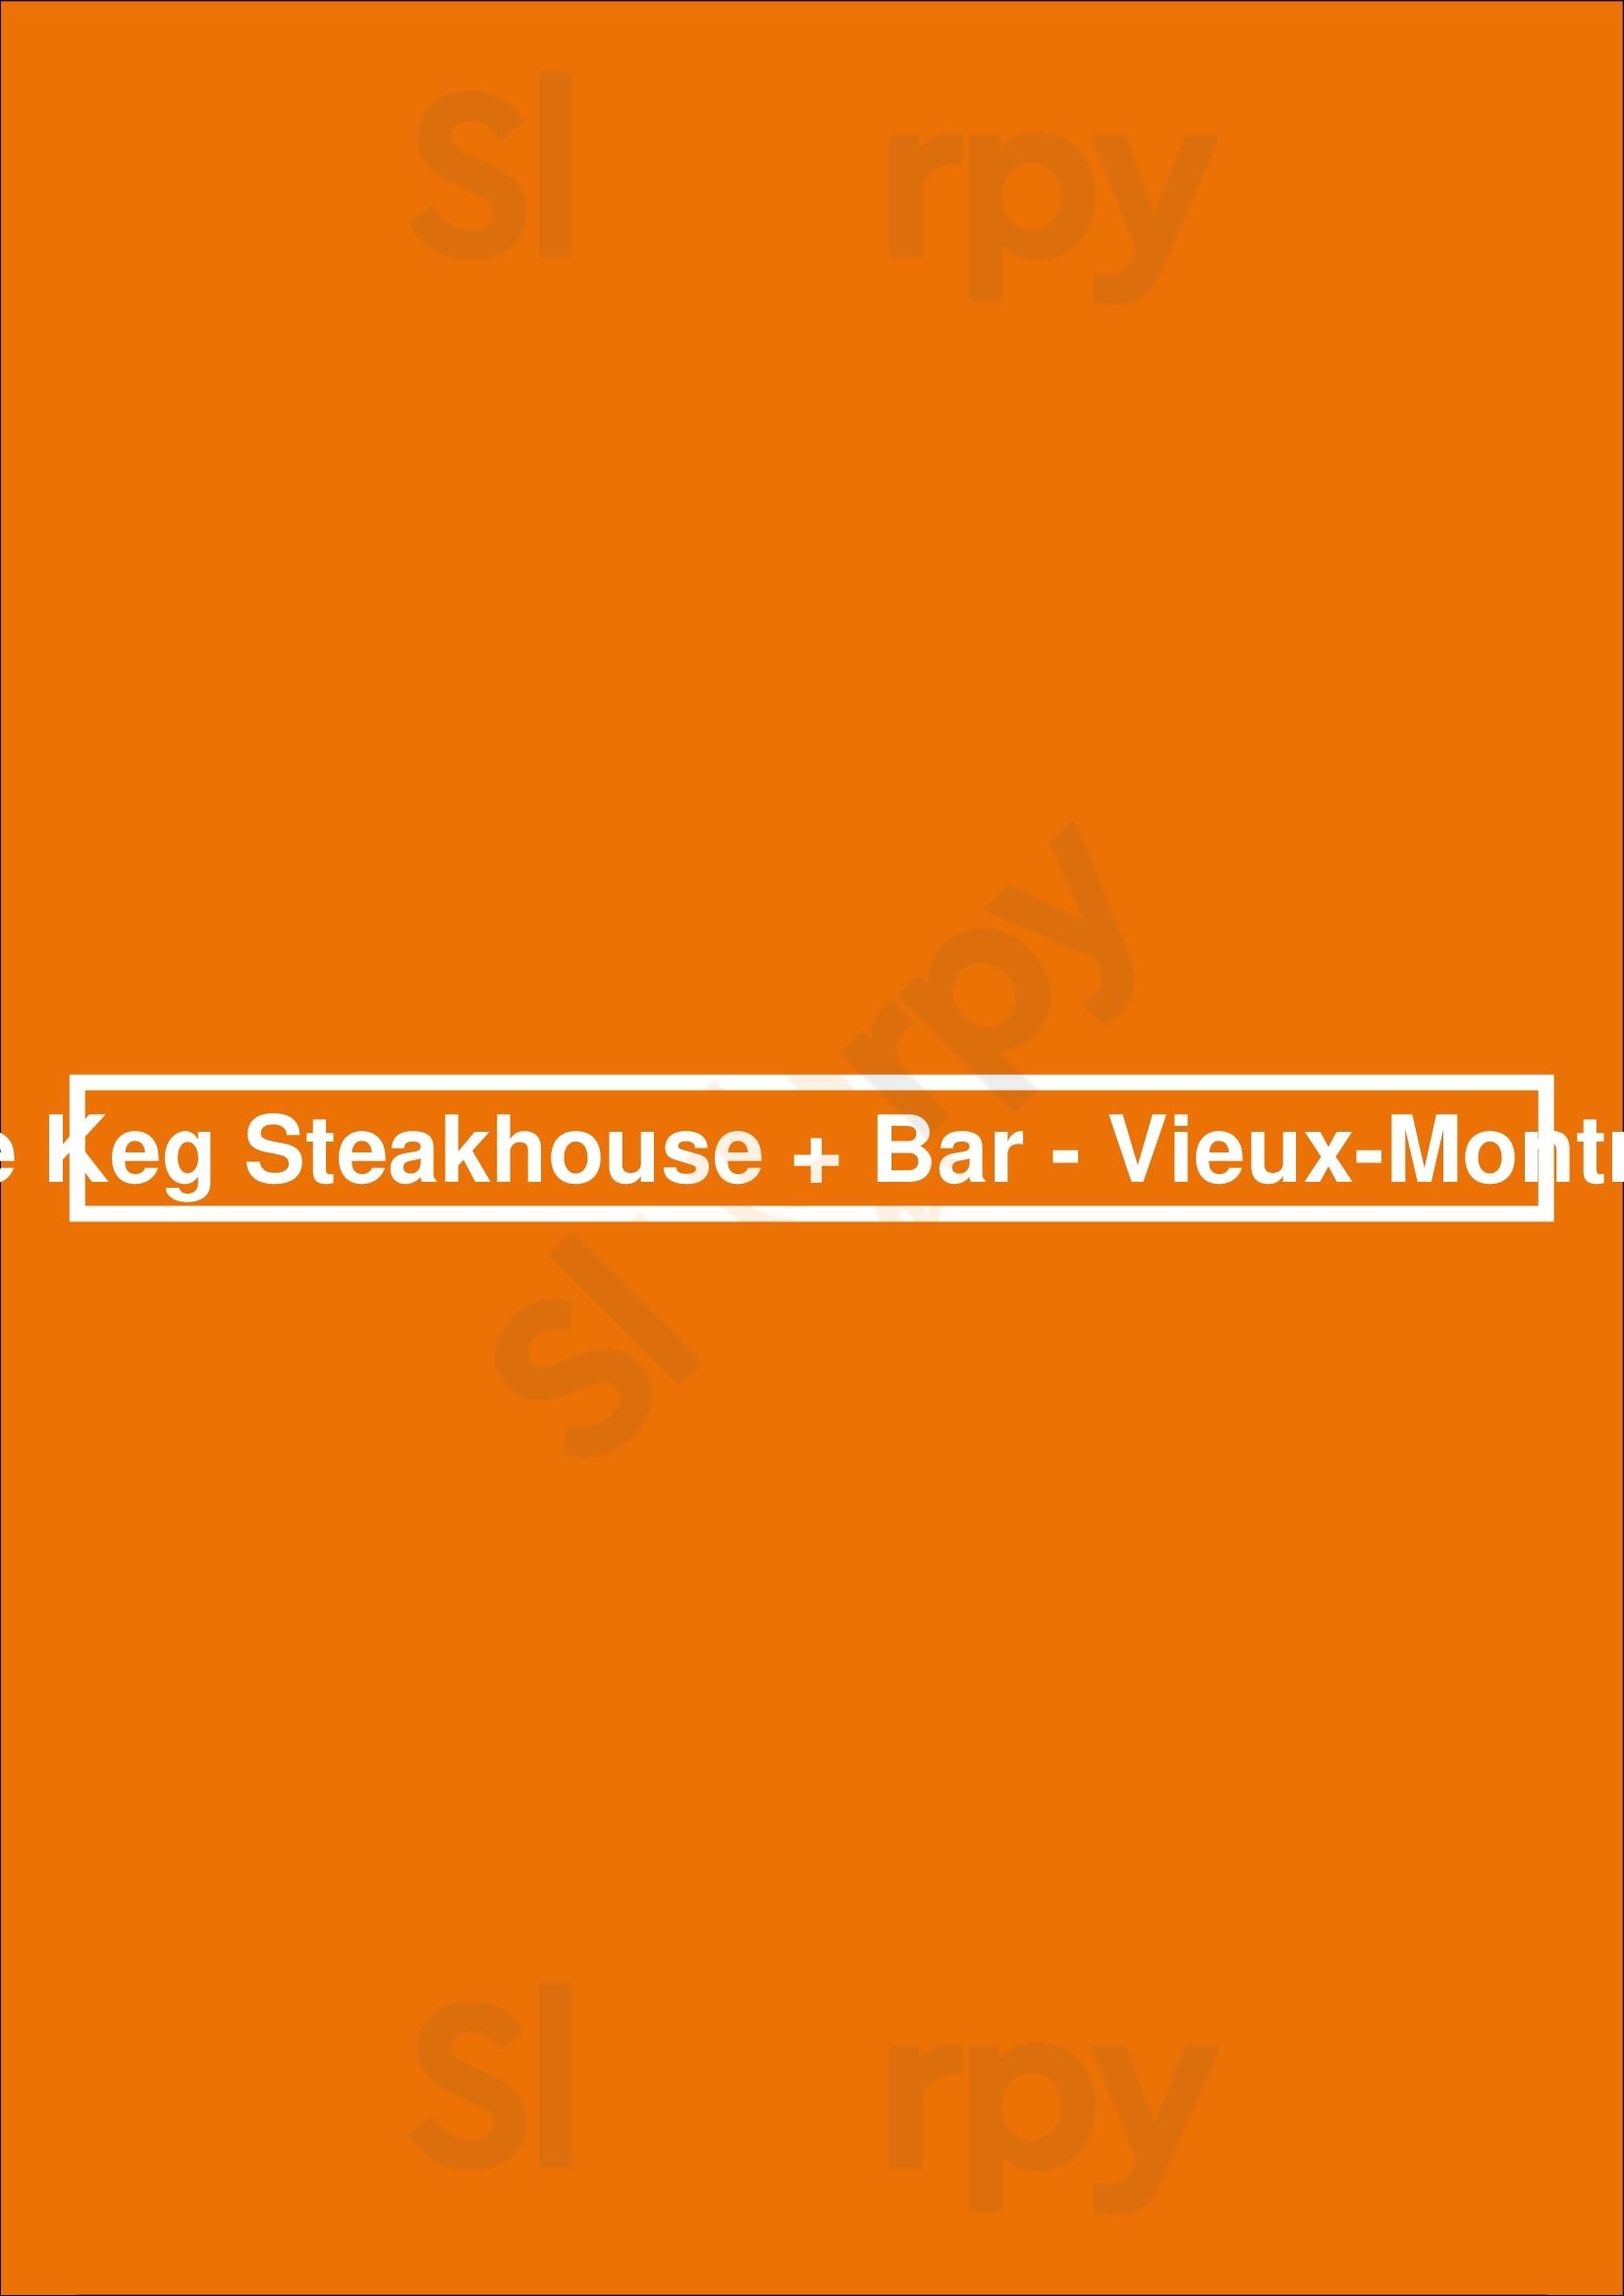 The Keg Steakhouse + Bar - Vieux Montreal Montreal Menu - 1